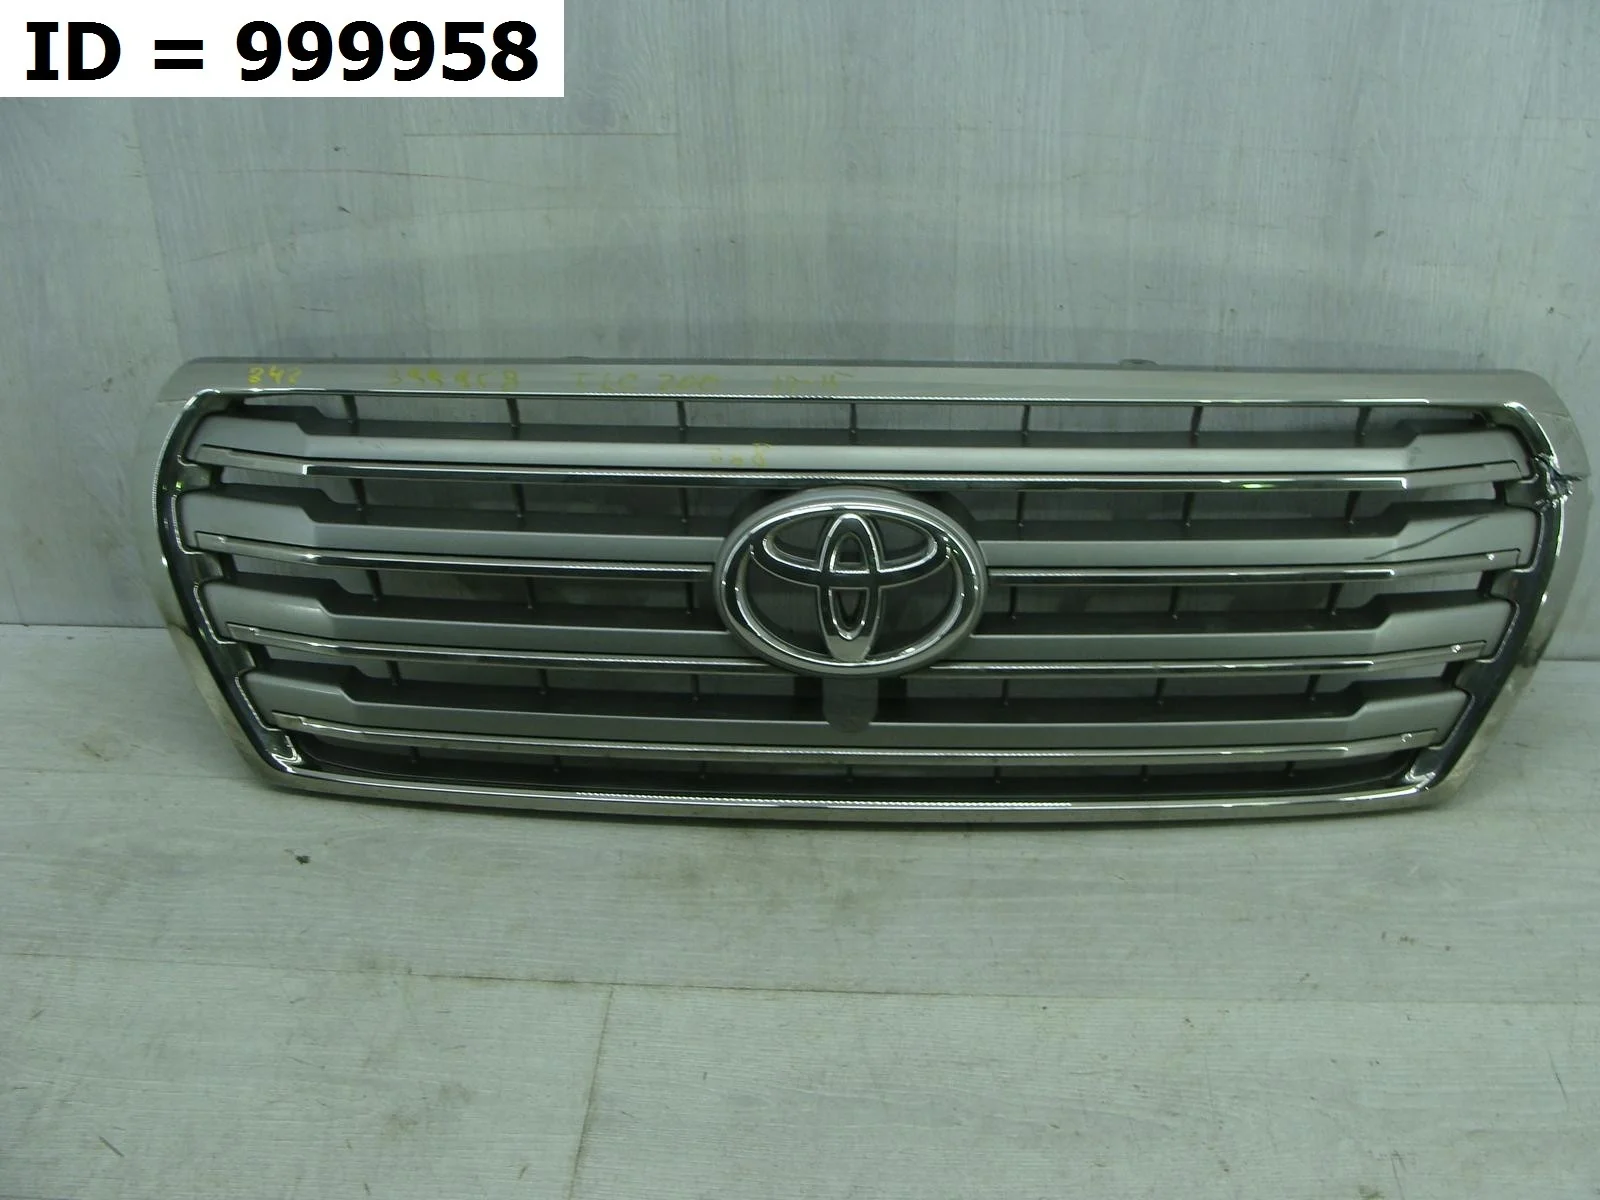 Решетка радиатора Toyota Land Cruiser